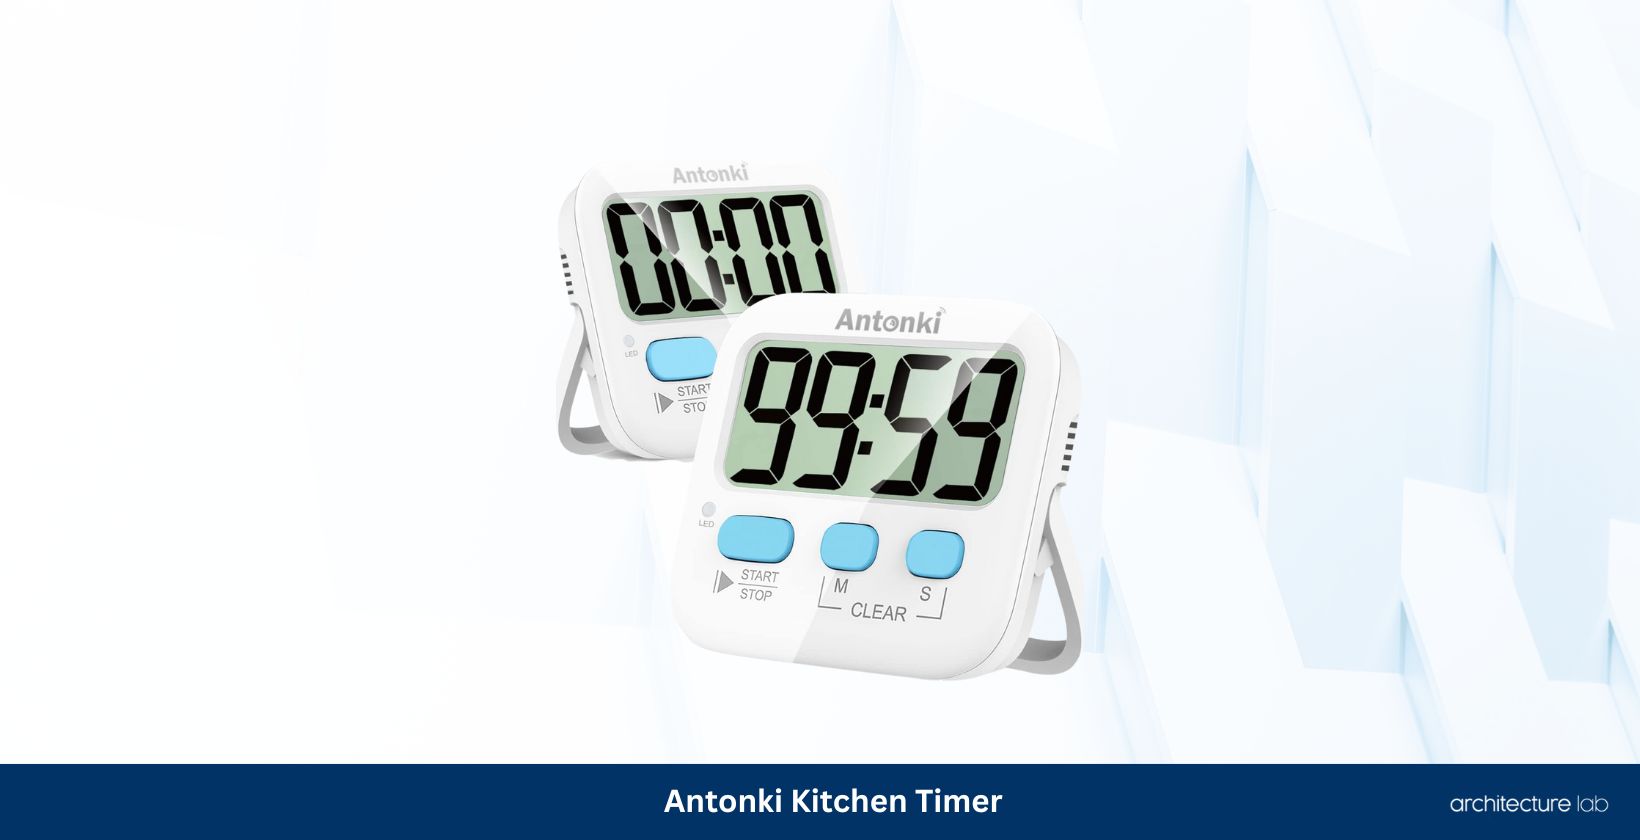 Antonki kitchen timer